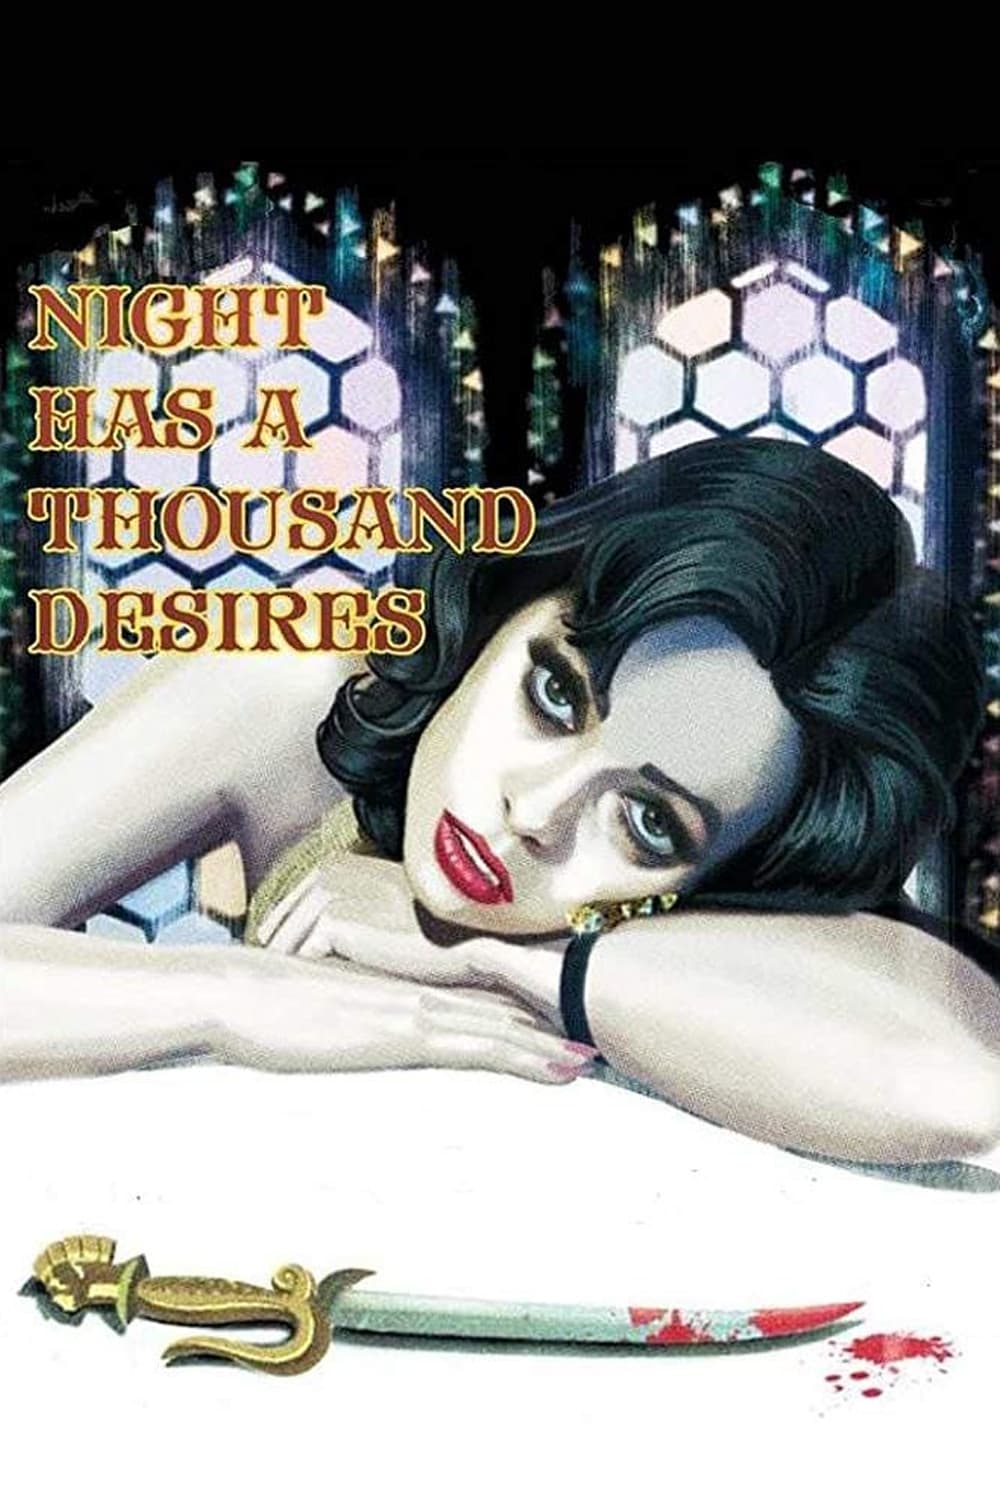 Night Has a Thousand Desires (1984)